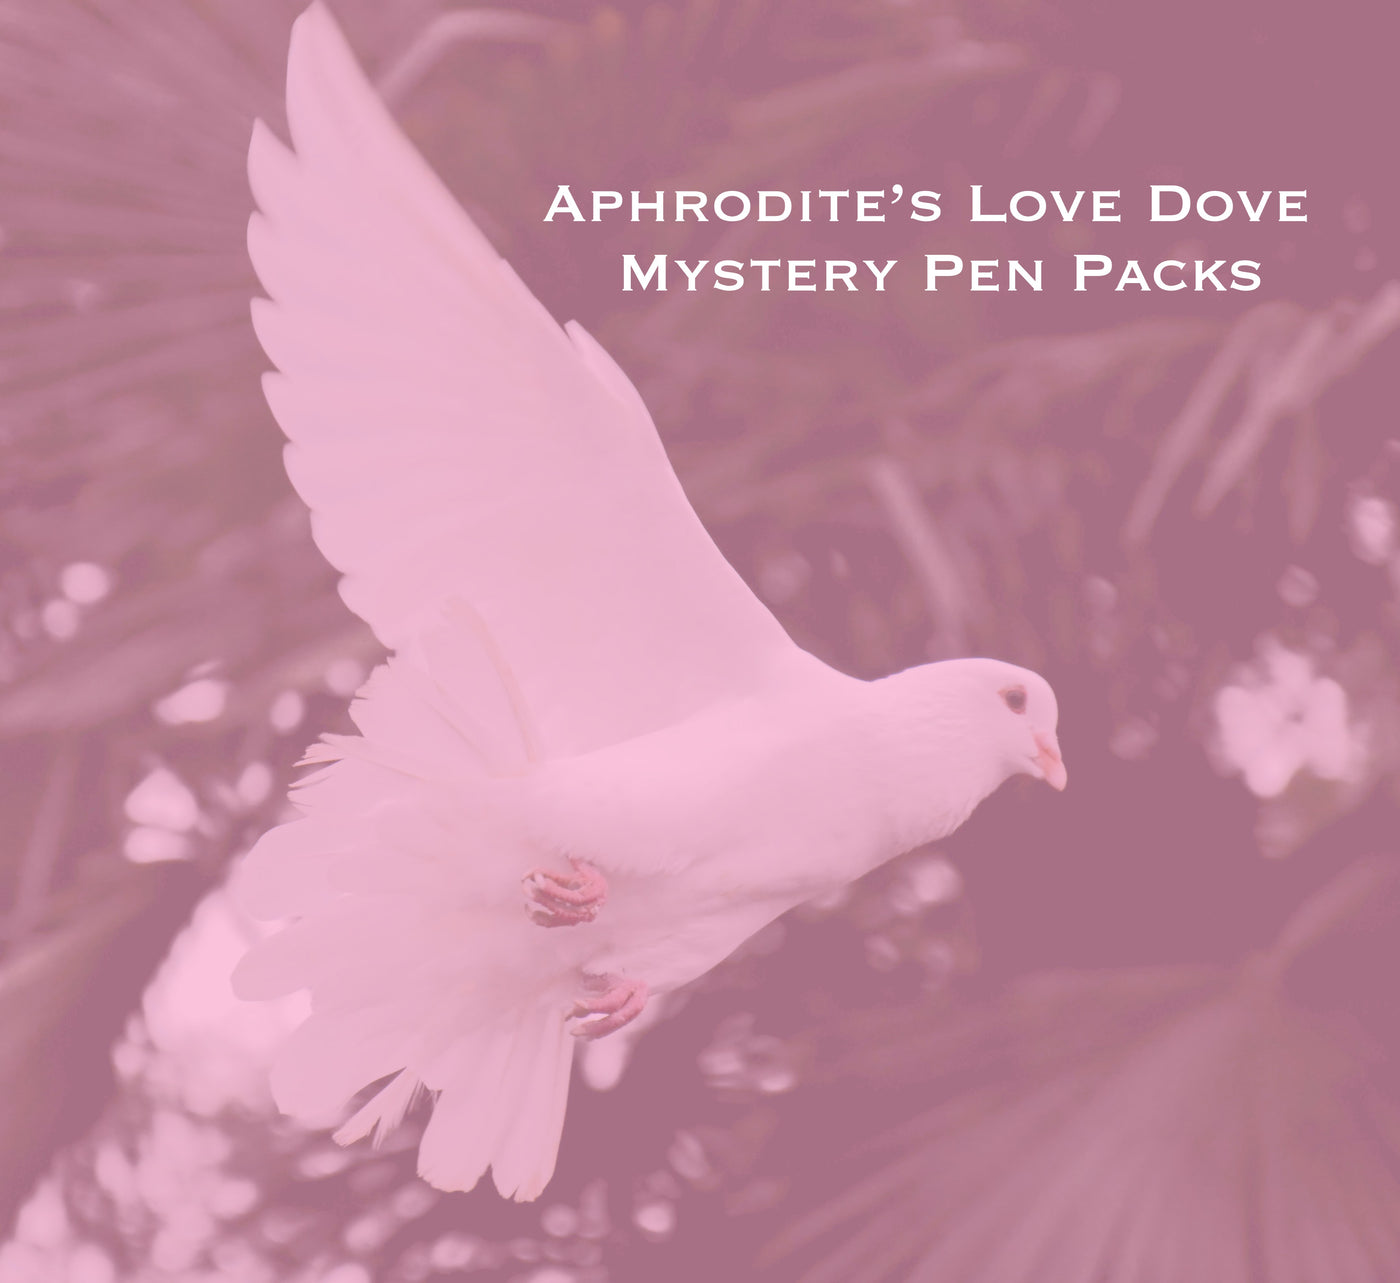 Aphrodite's Love Dove Mystery Pen Packs